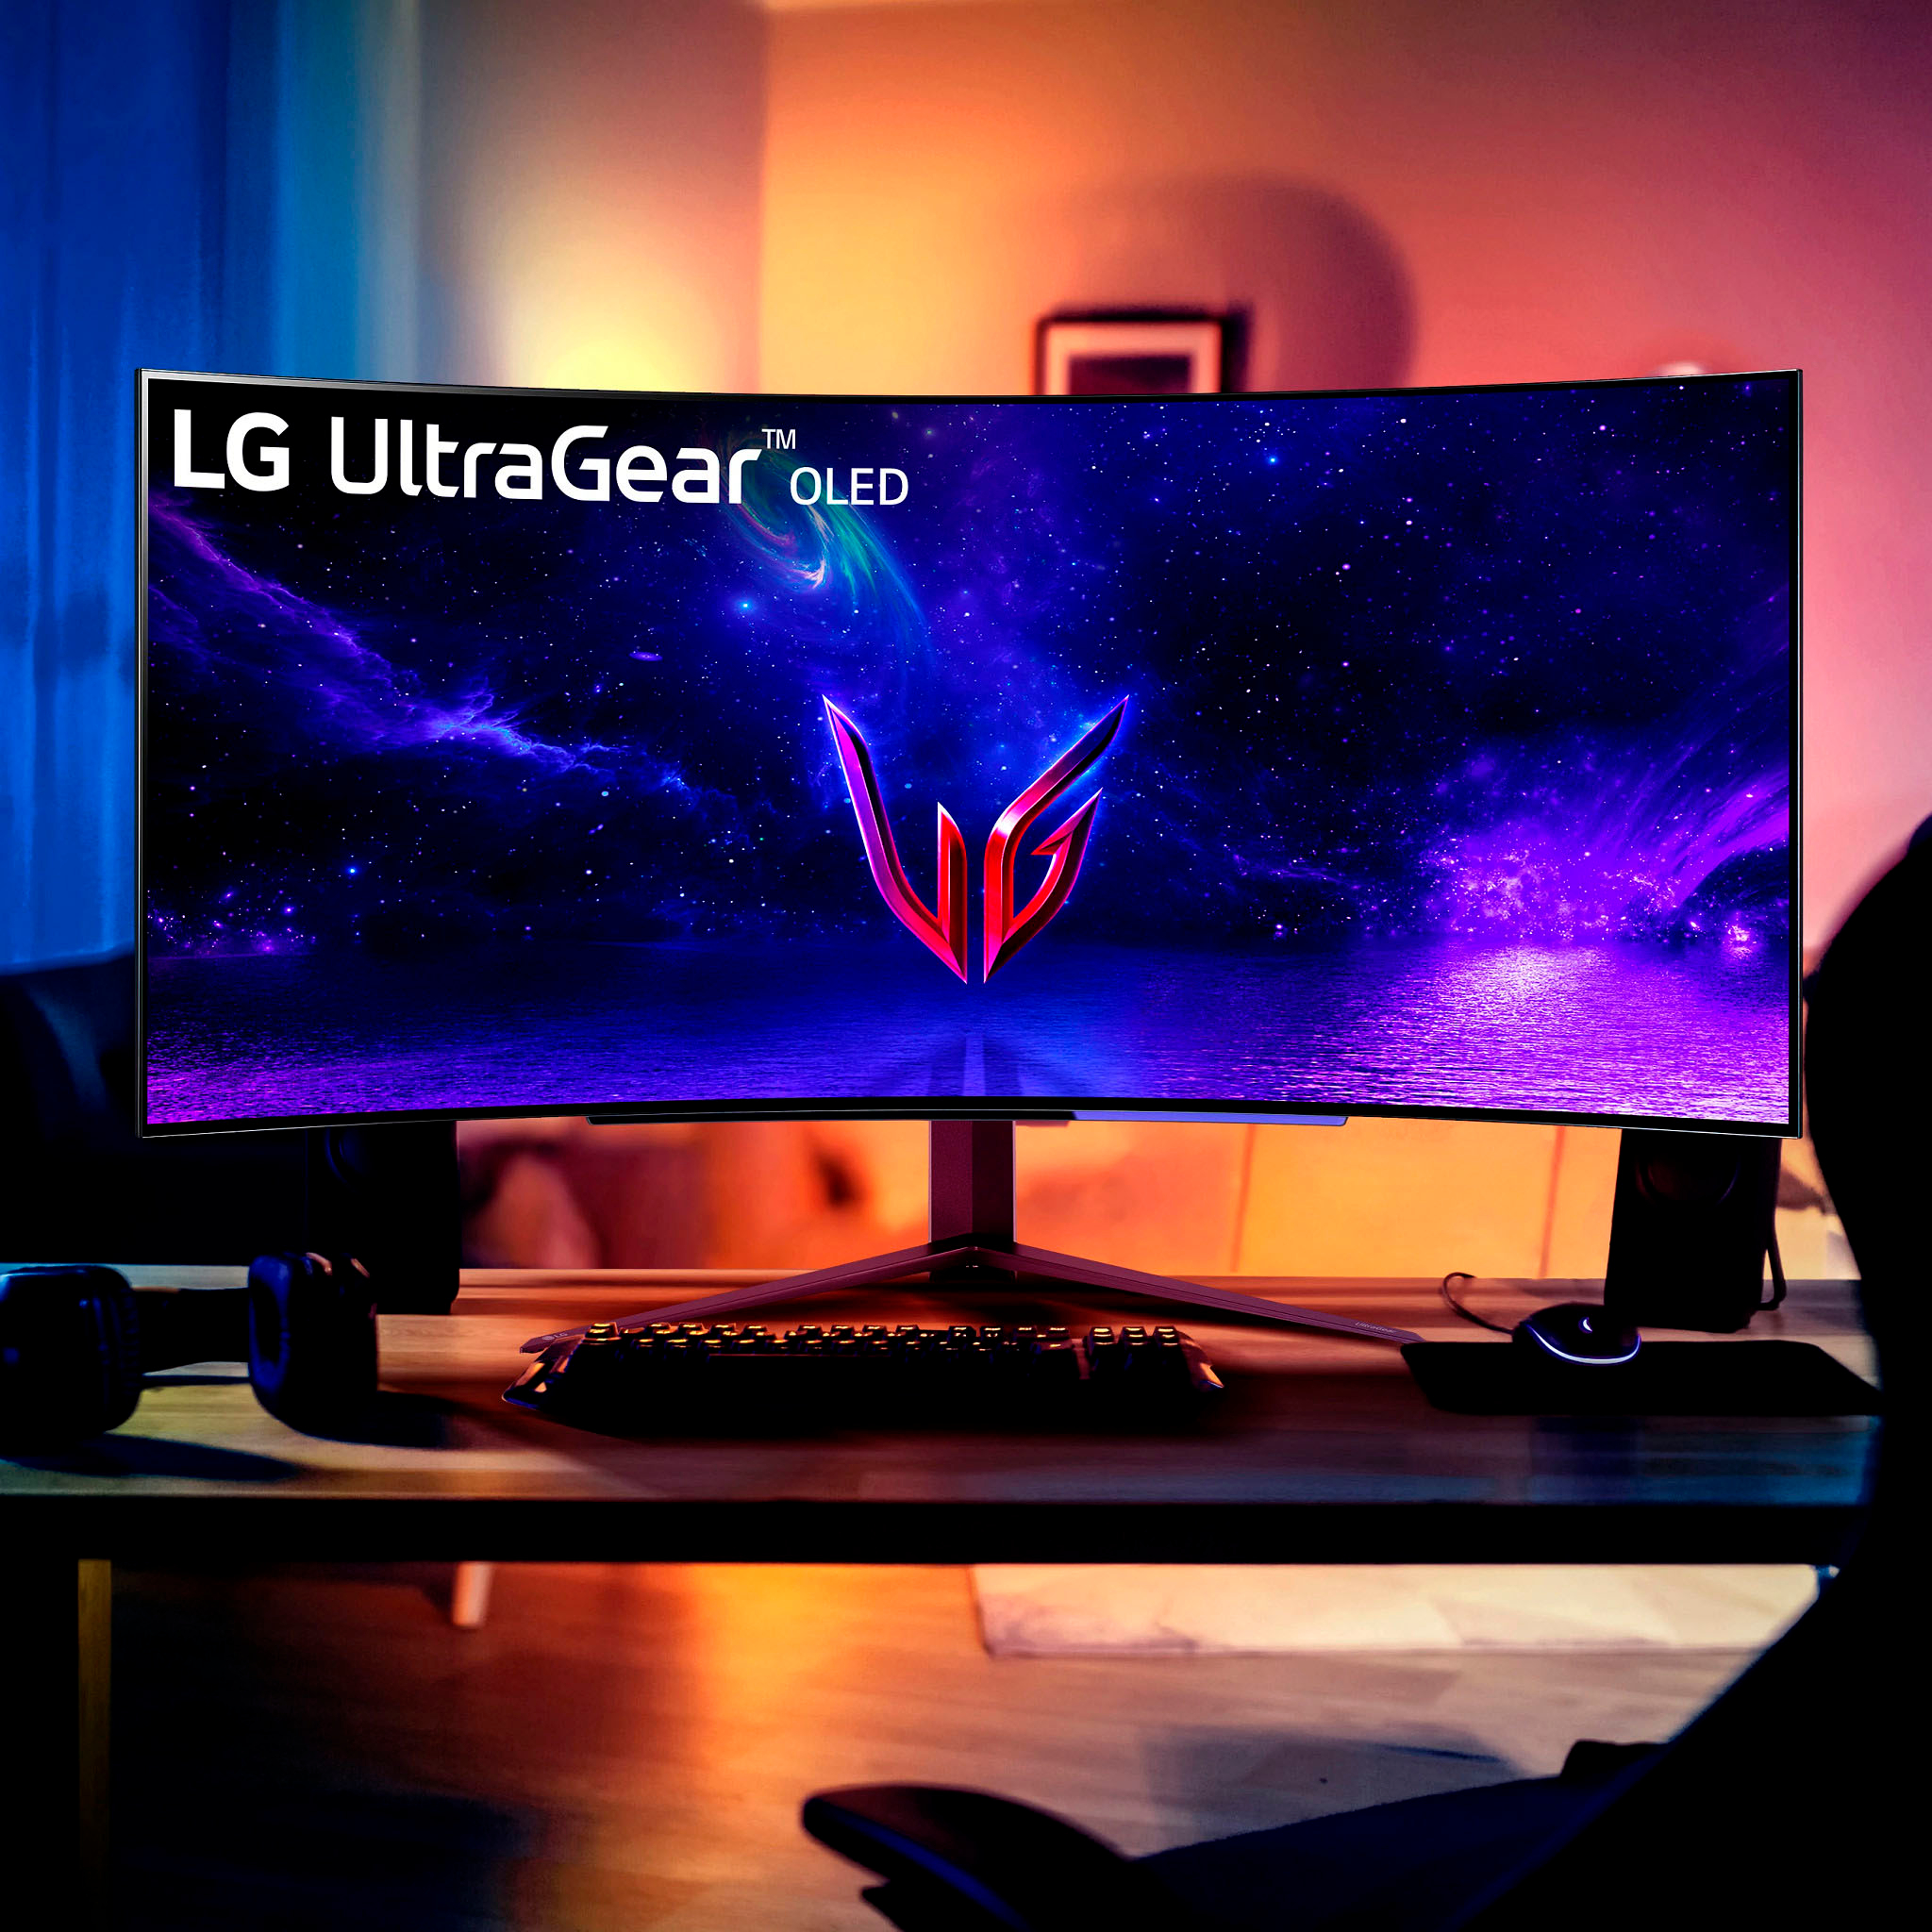 Comprar Monitor Gaming OLED LG UltraGear™ Edición League of Legends